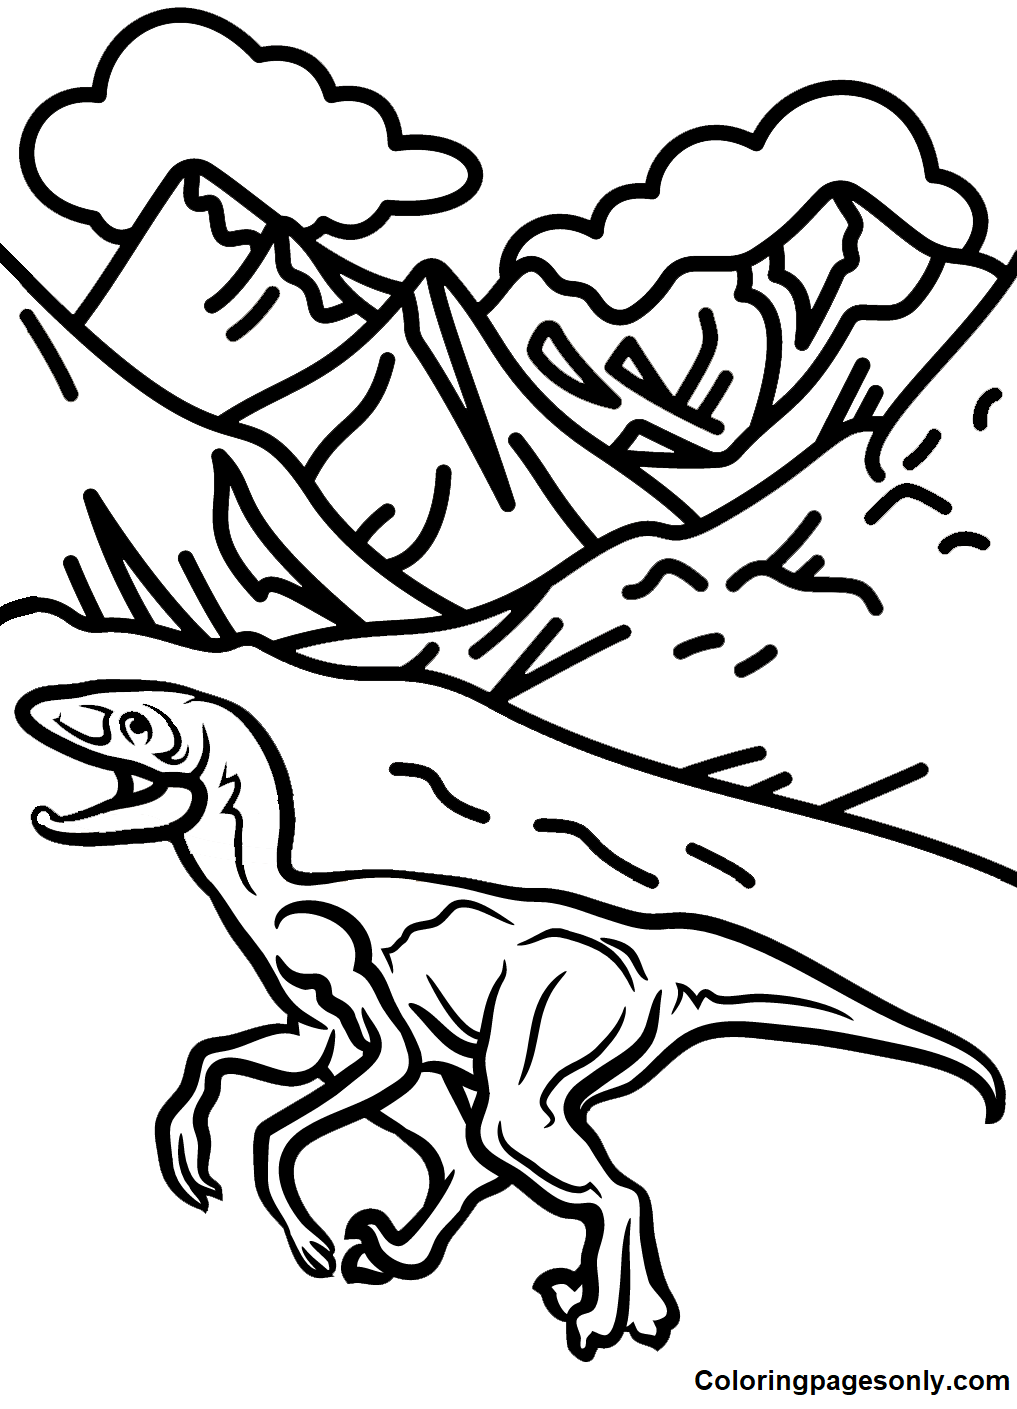 Velociraptor Picture Coloring Page